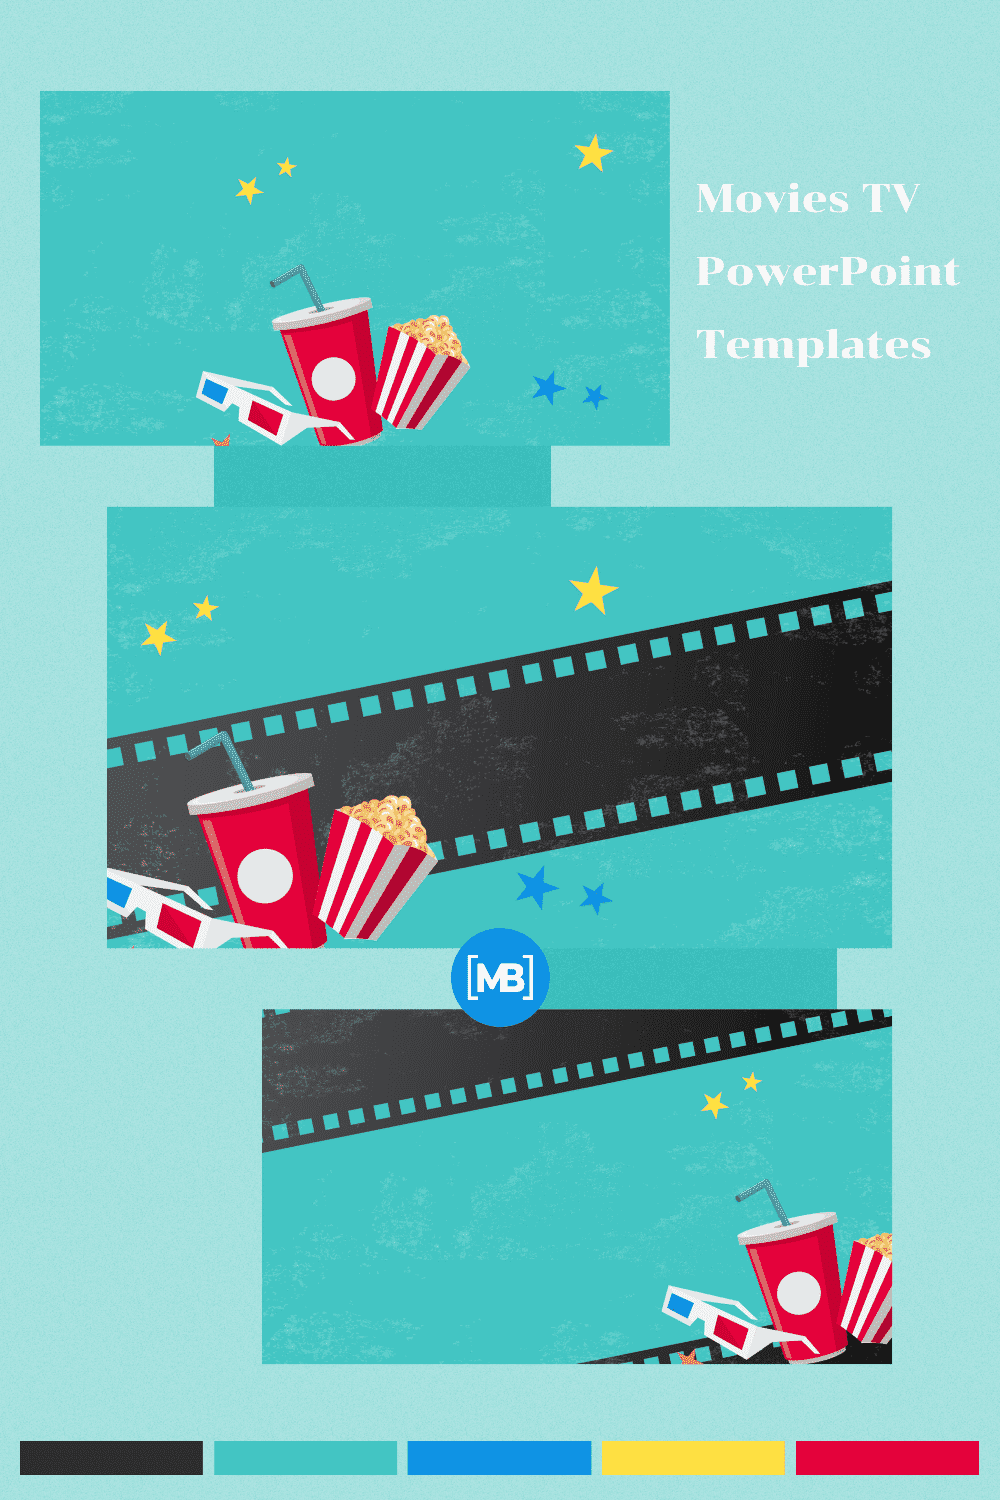 Movies TV powerpoint templates.